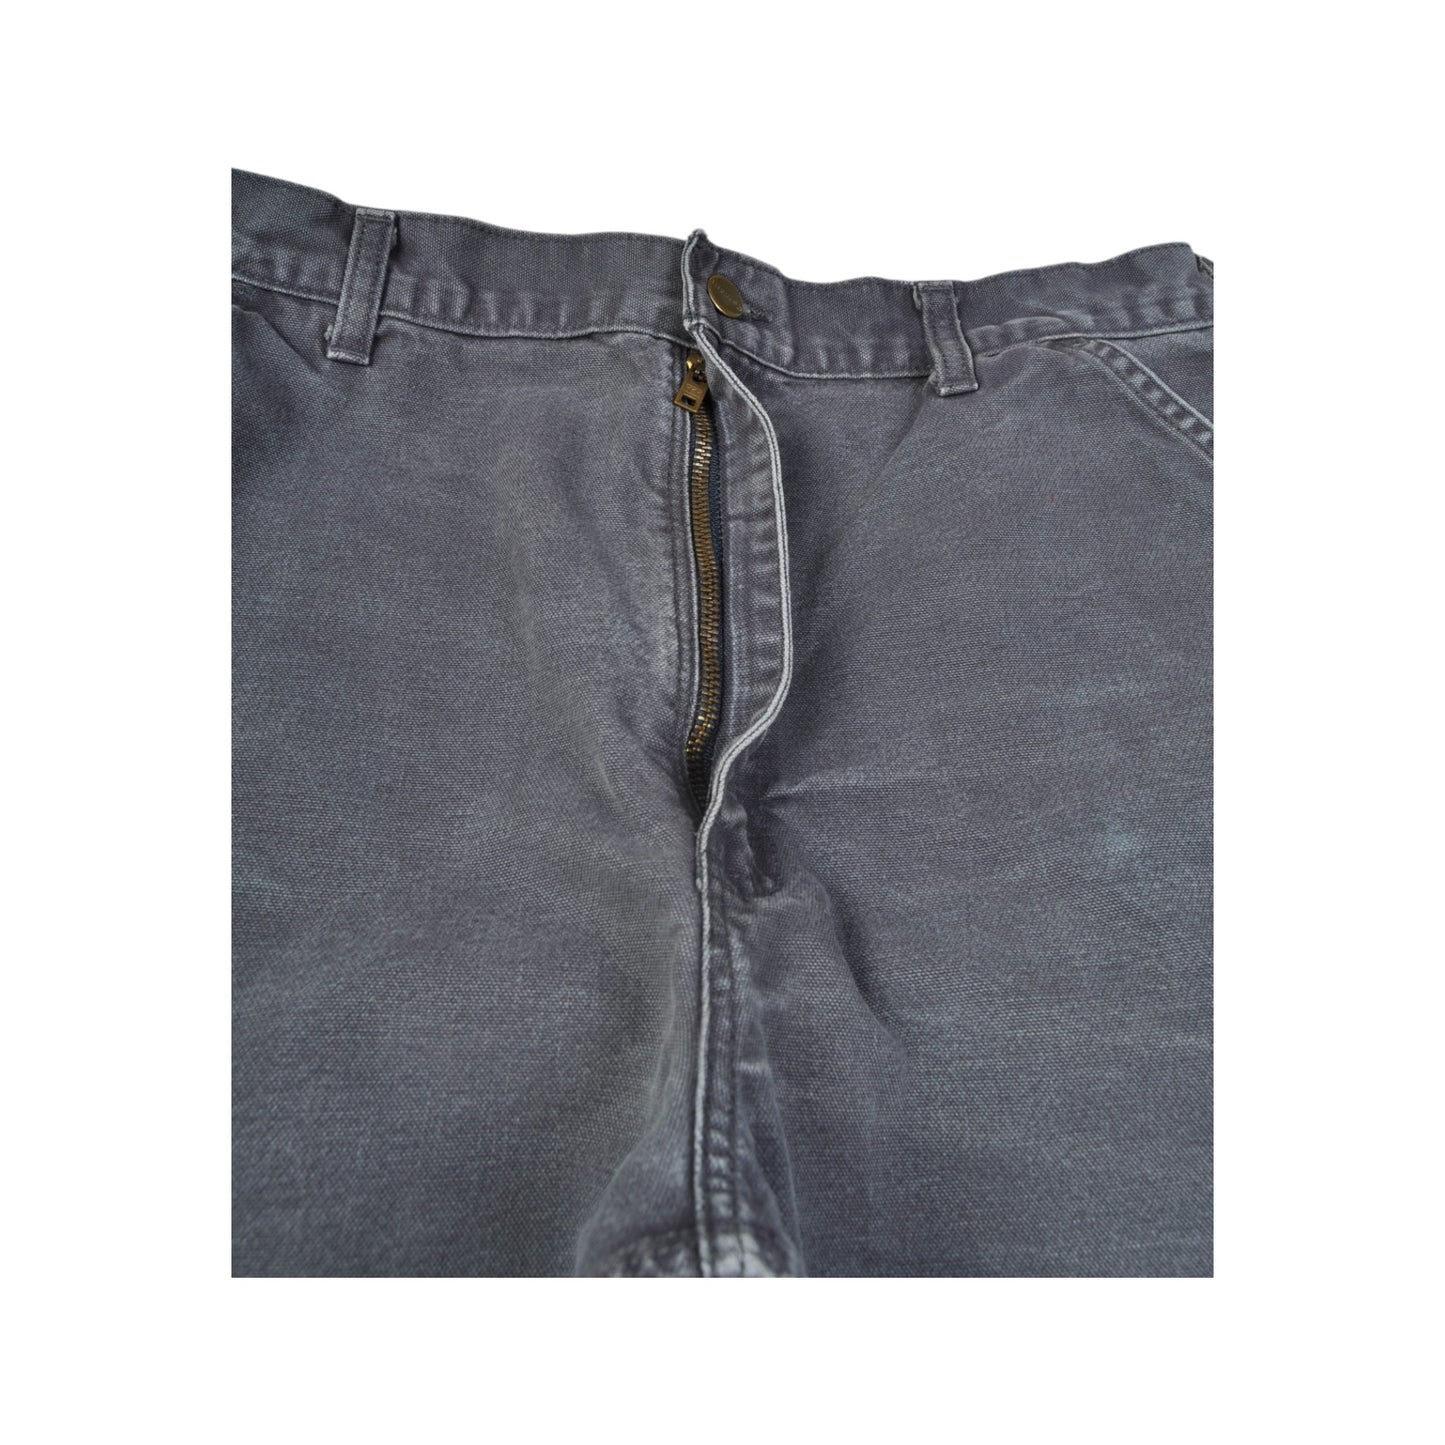 Vintage Carhartt Carpenter Pants Grey W38 L32